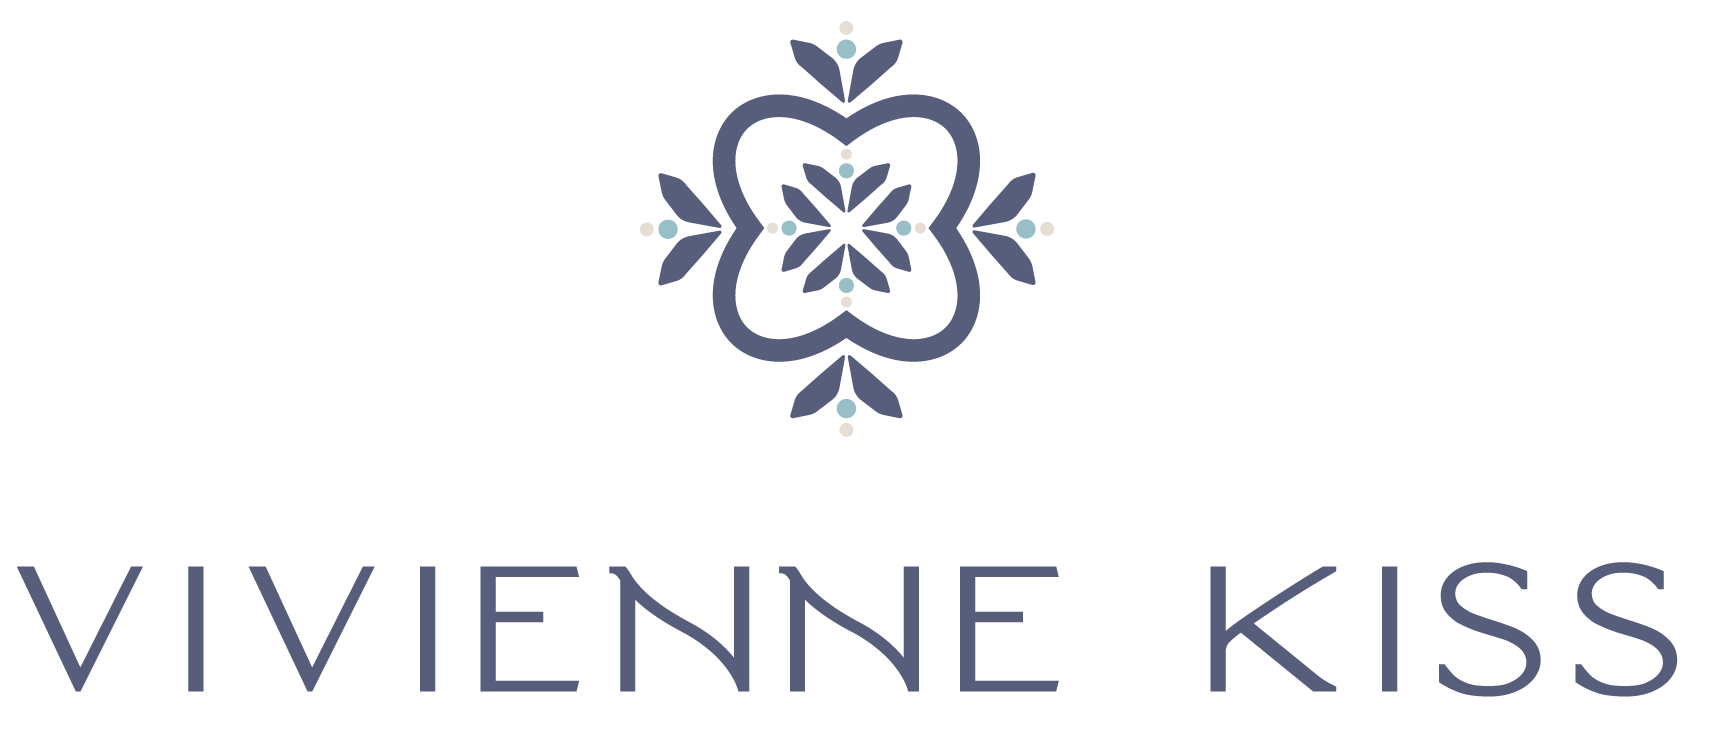 Vivienne kiss - logo principal